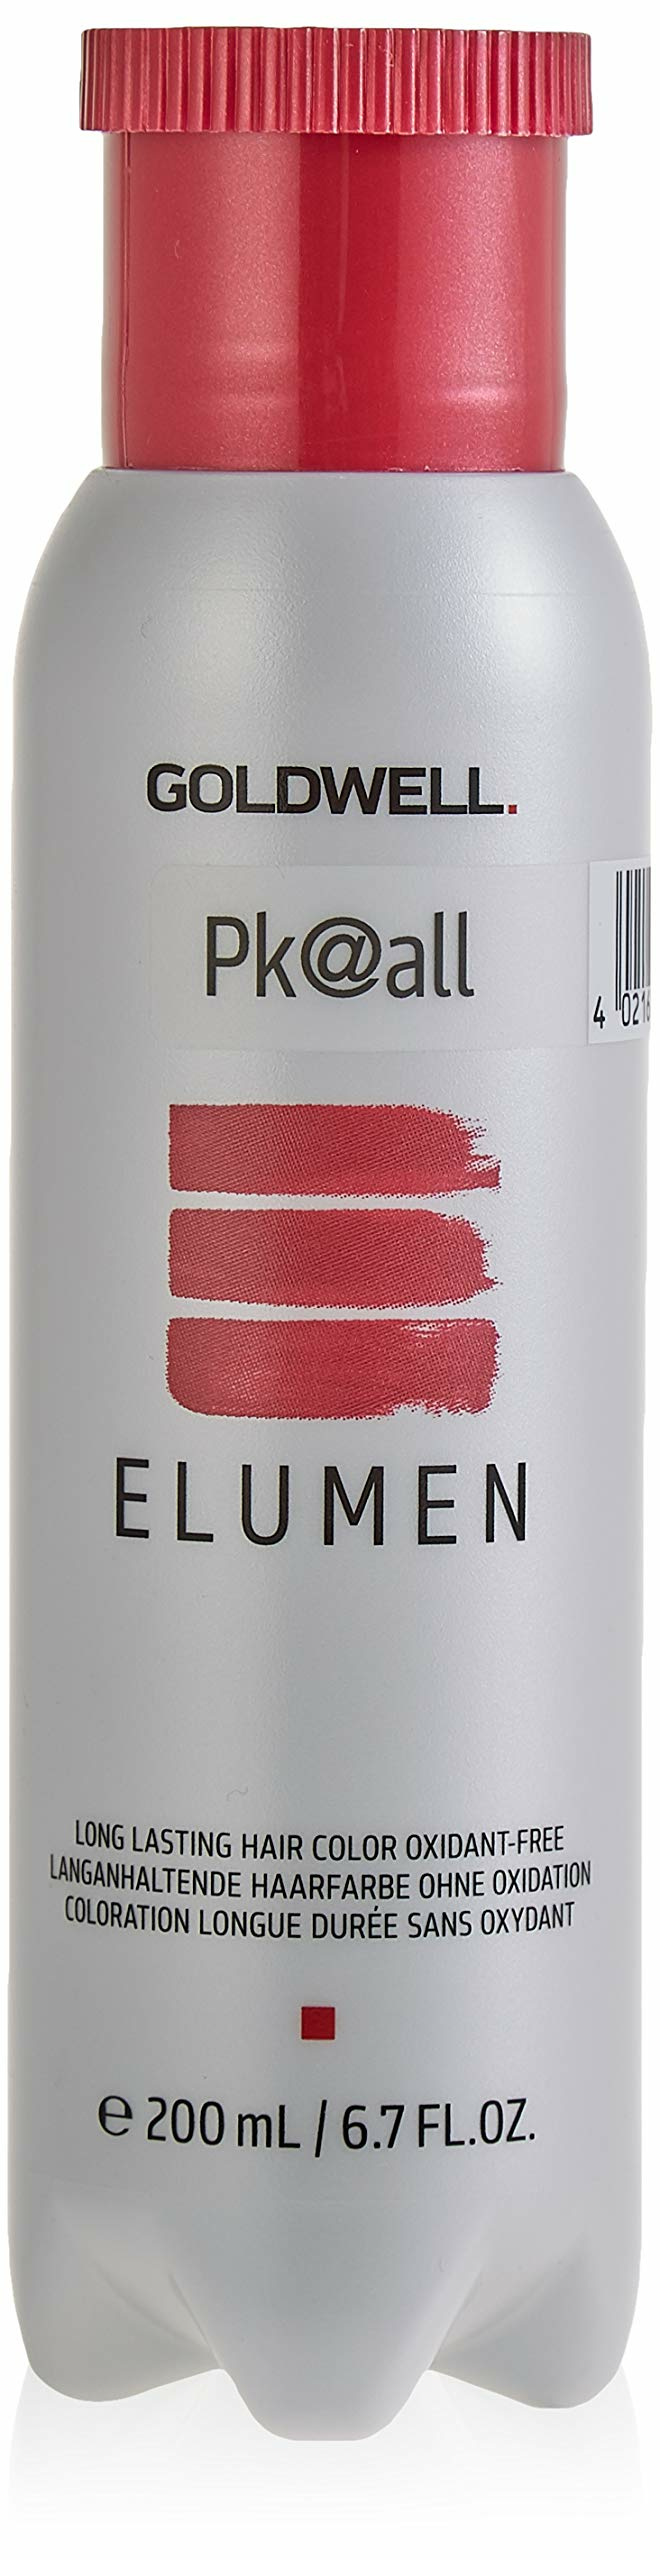 Elumen Color CLEAR 200ml